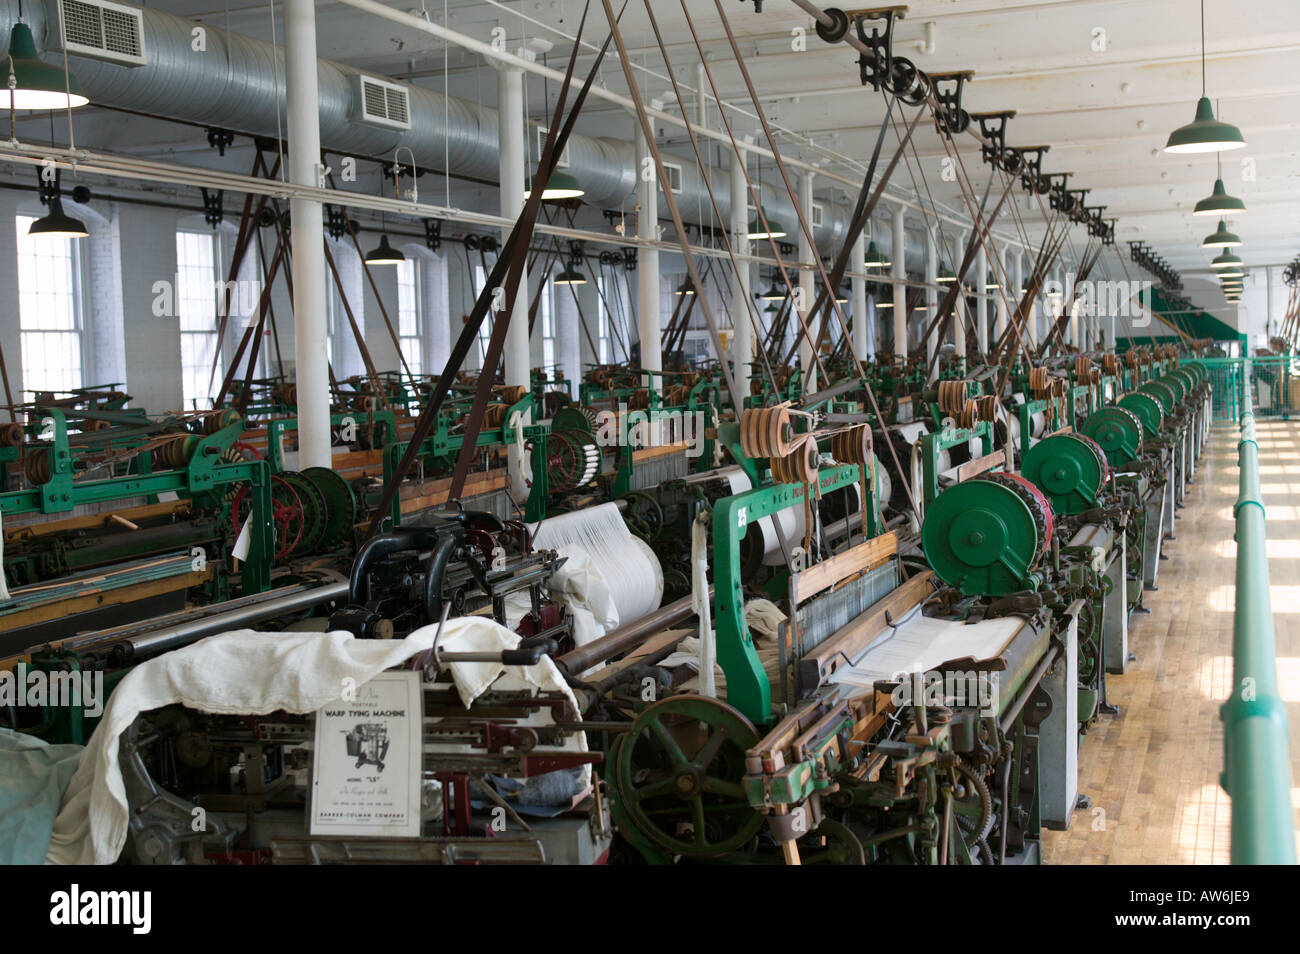 Parque Nacional Boott Cotton Mills Revolución Industrial en América Lowell Massachusetts Foto de stock